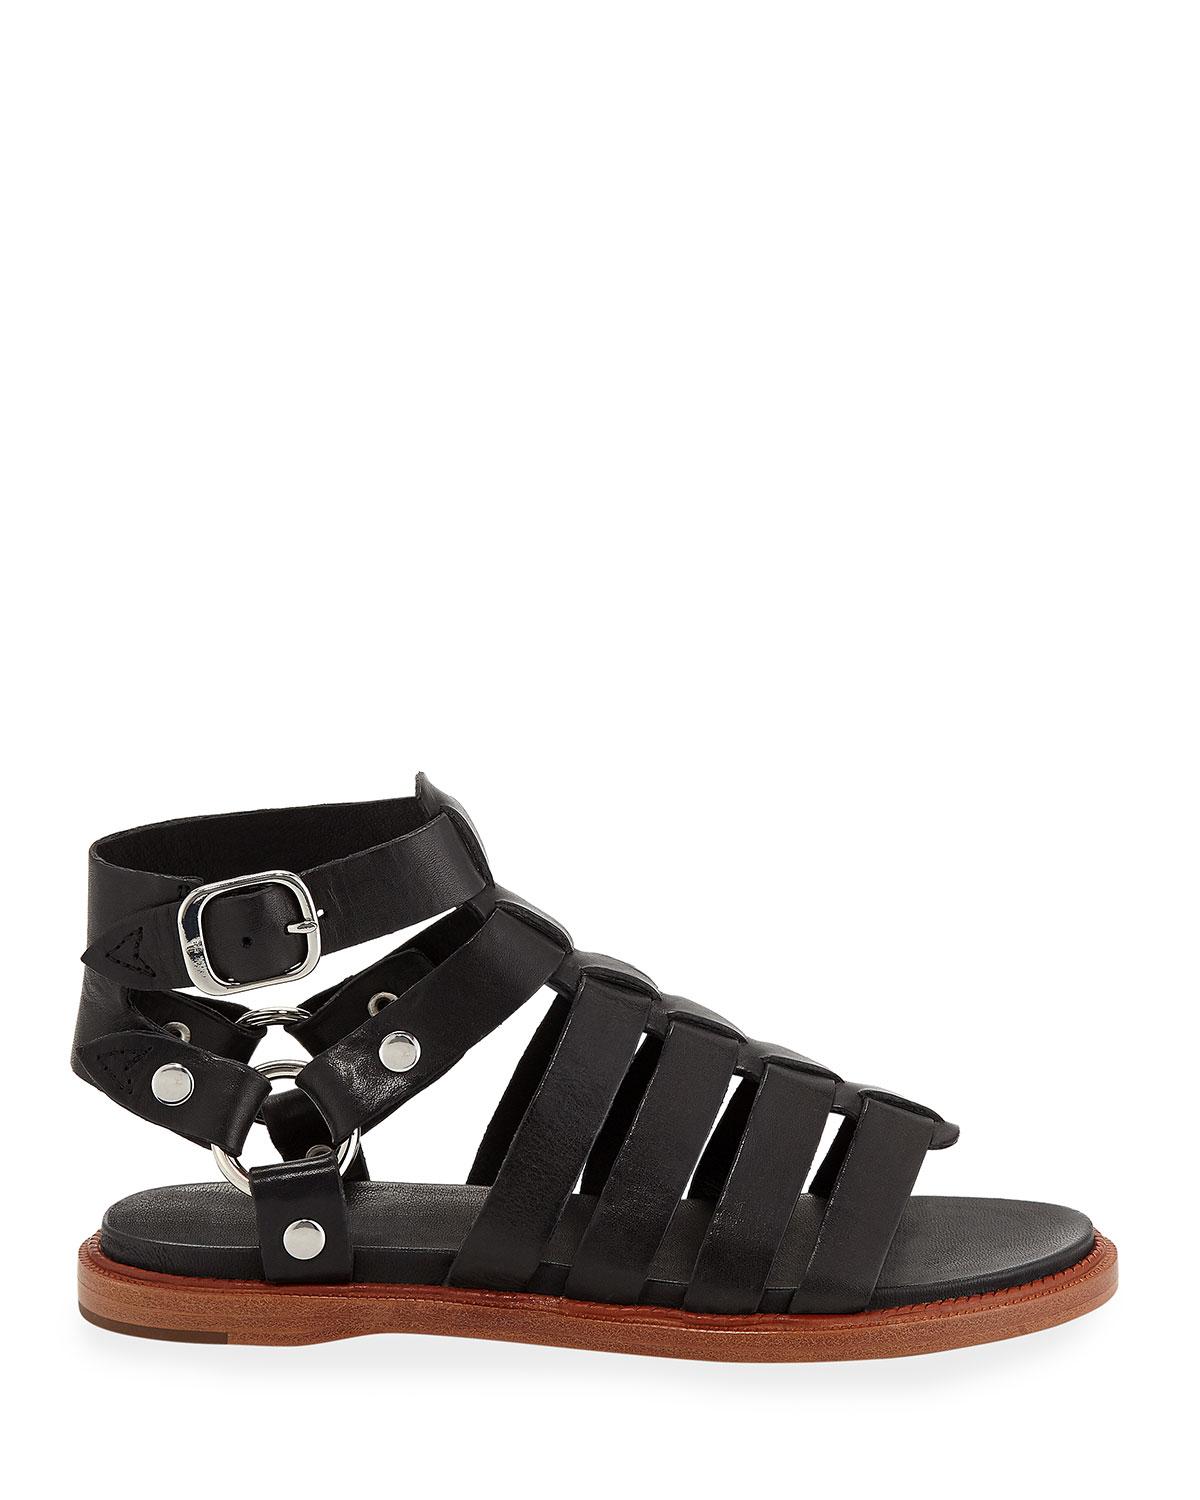 Frye Andora Leather Gladiator Sandals 